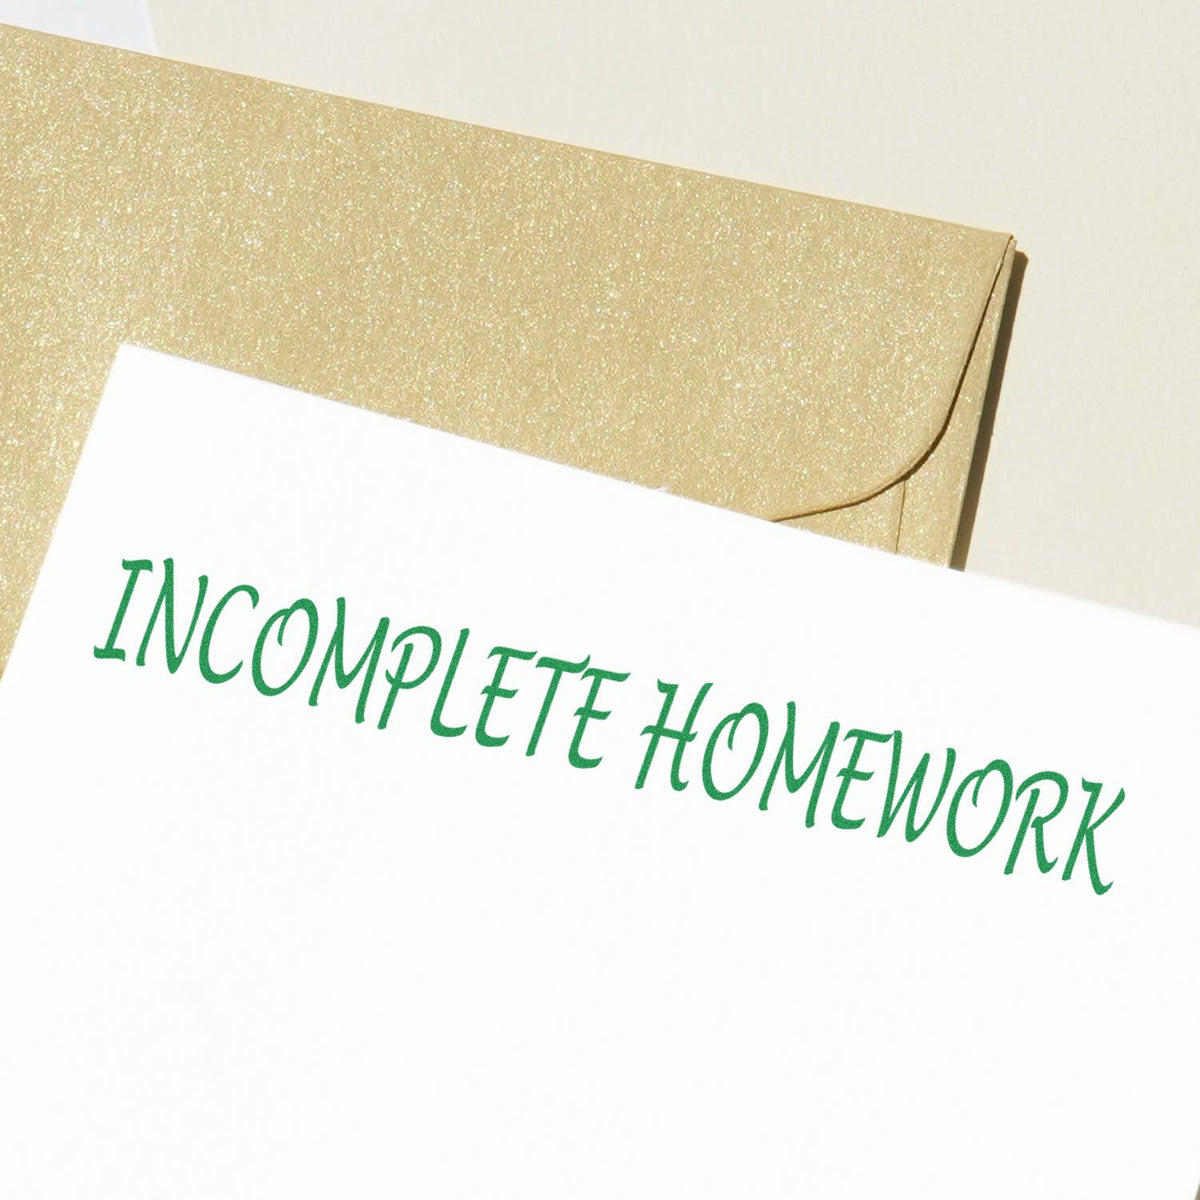 Slim Pre Inked Incomplete Homework Stamp In Use